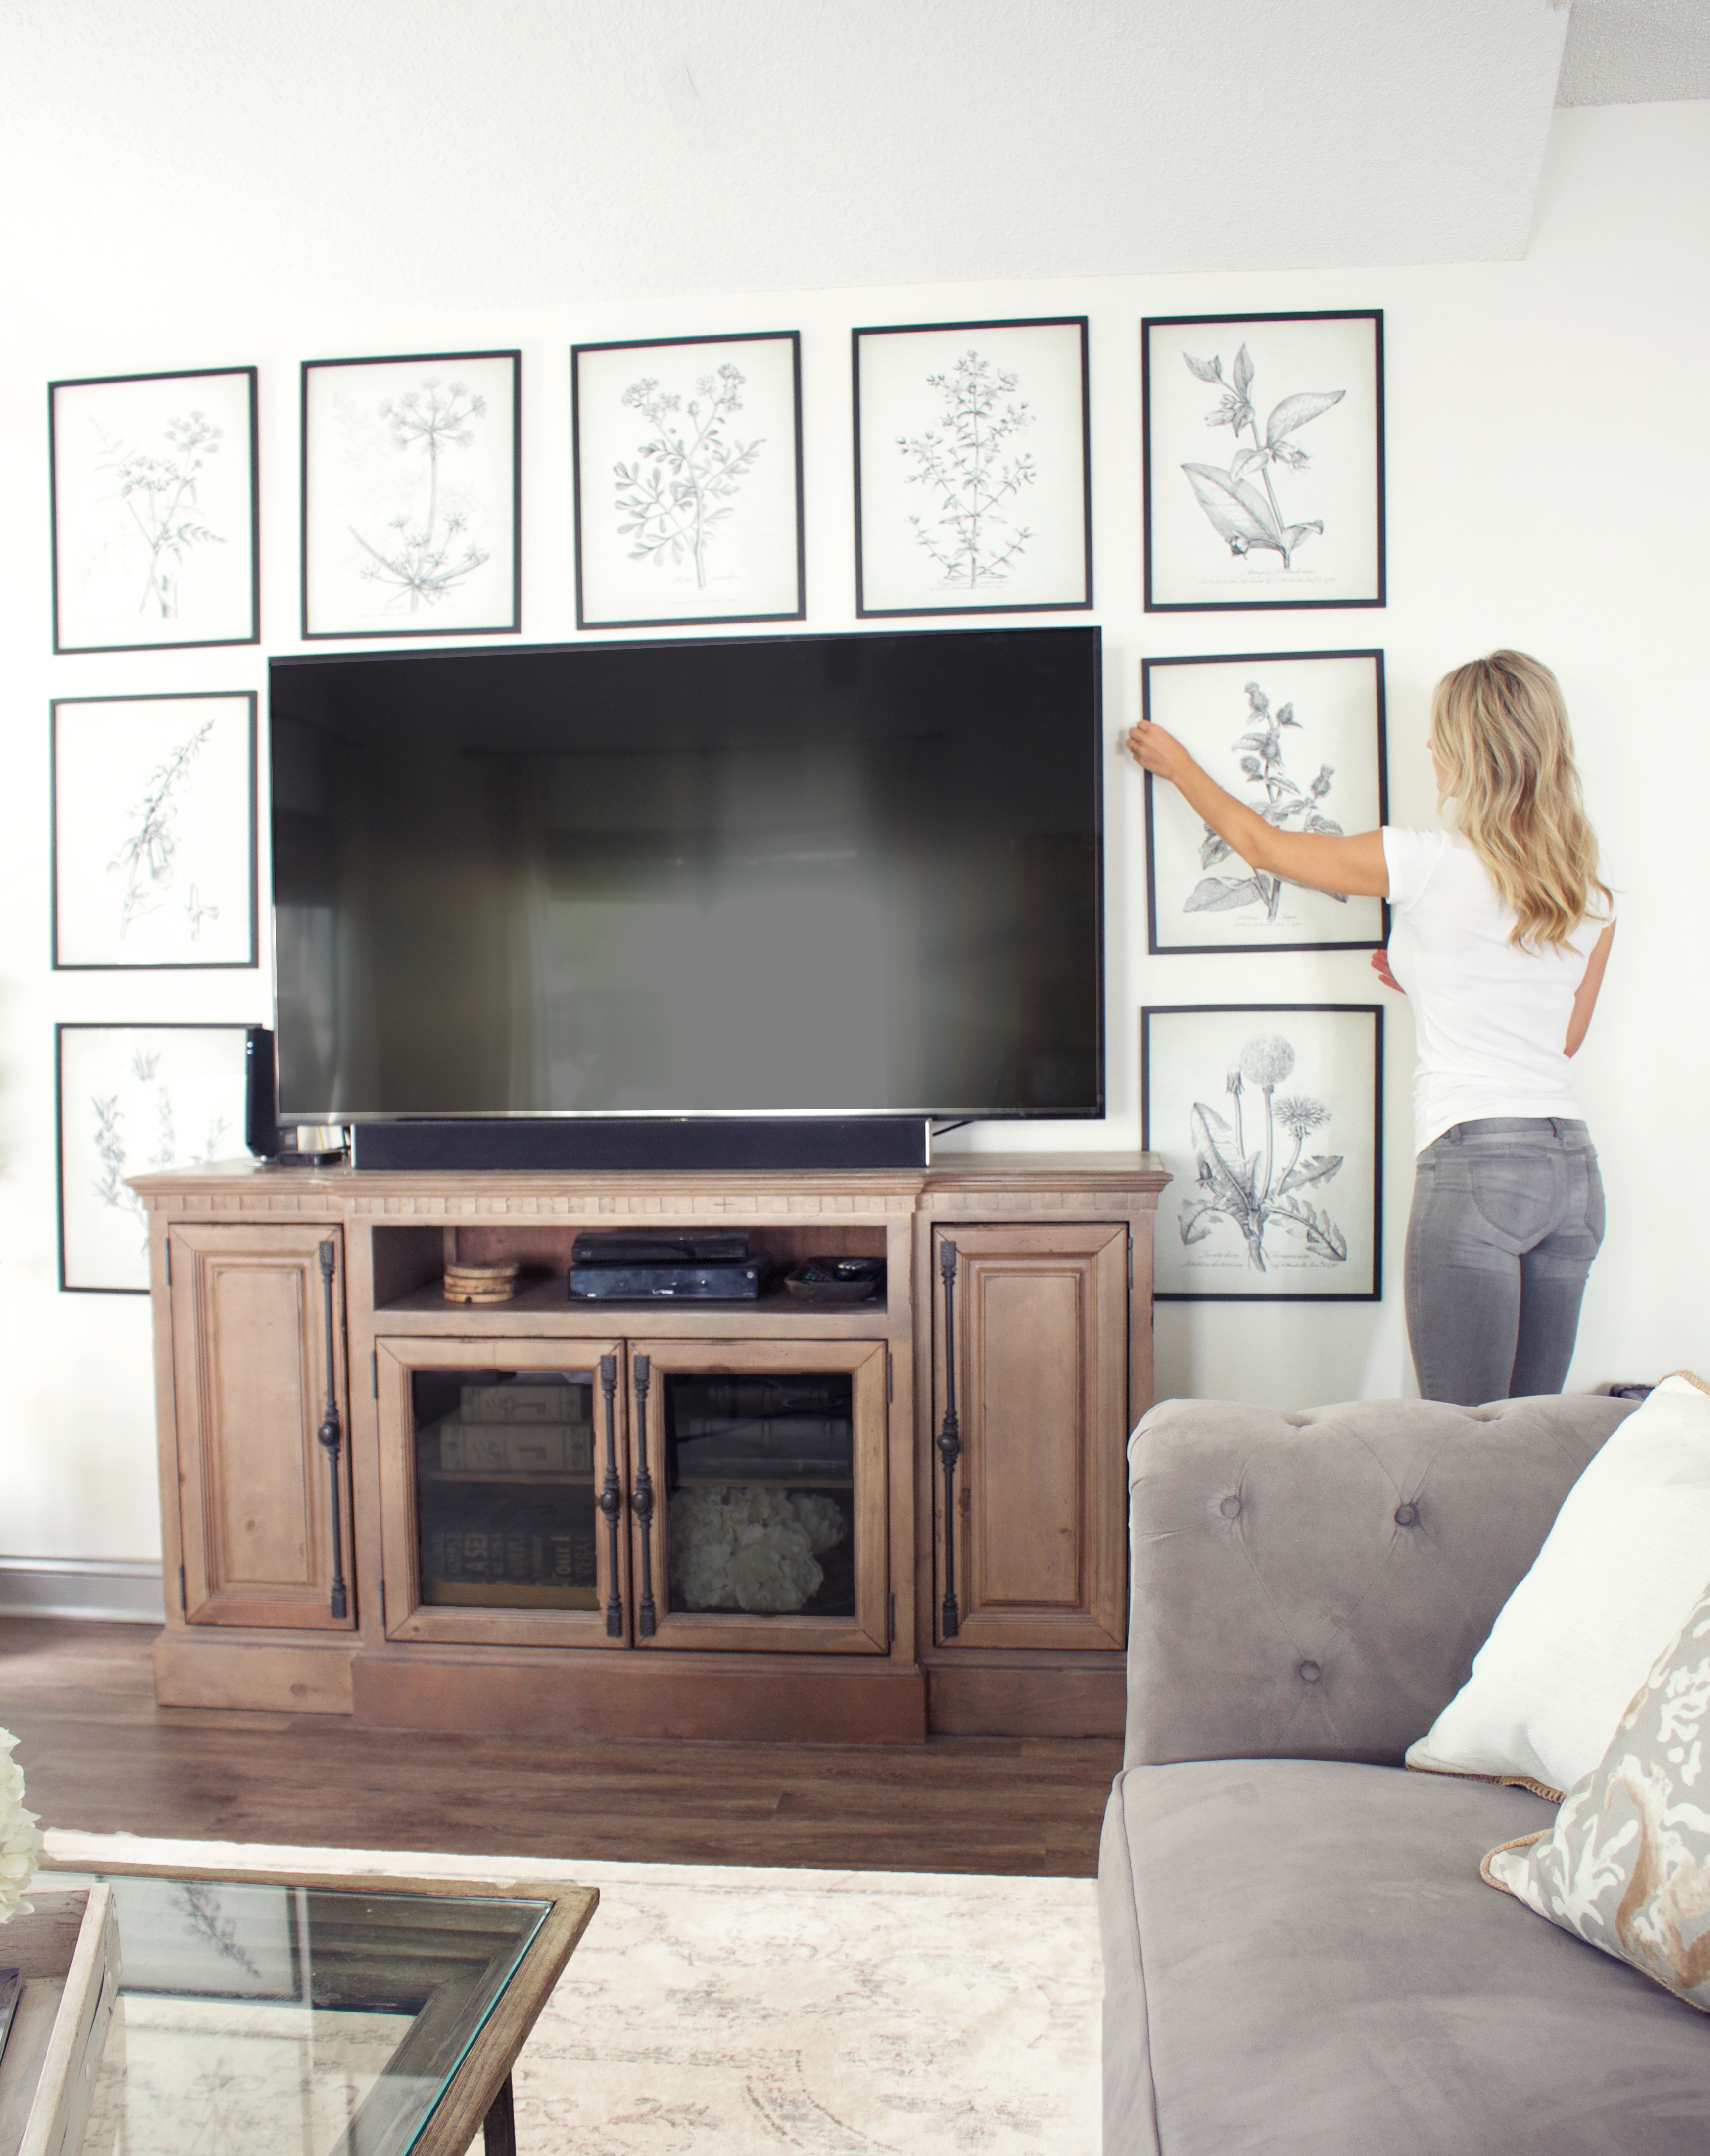 8 Creative Ways to Decorate Around Your TV - Tuft & Trim